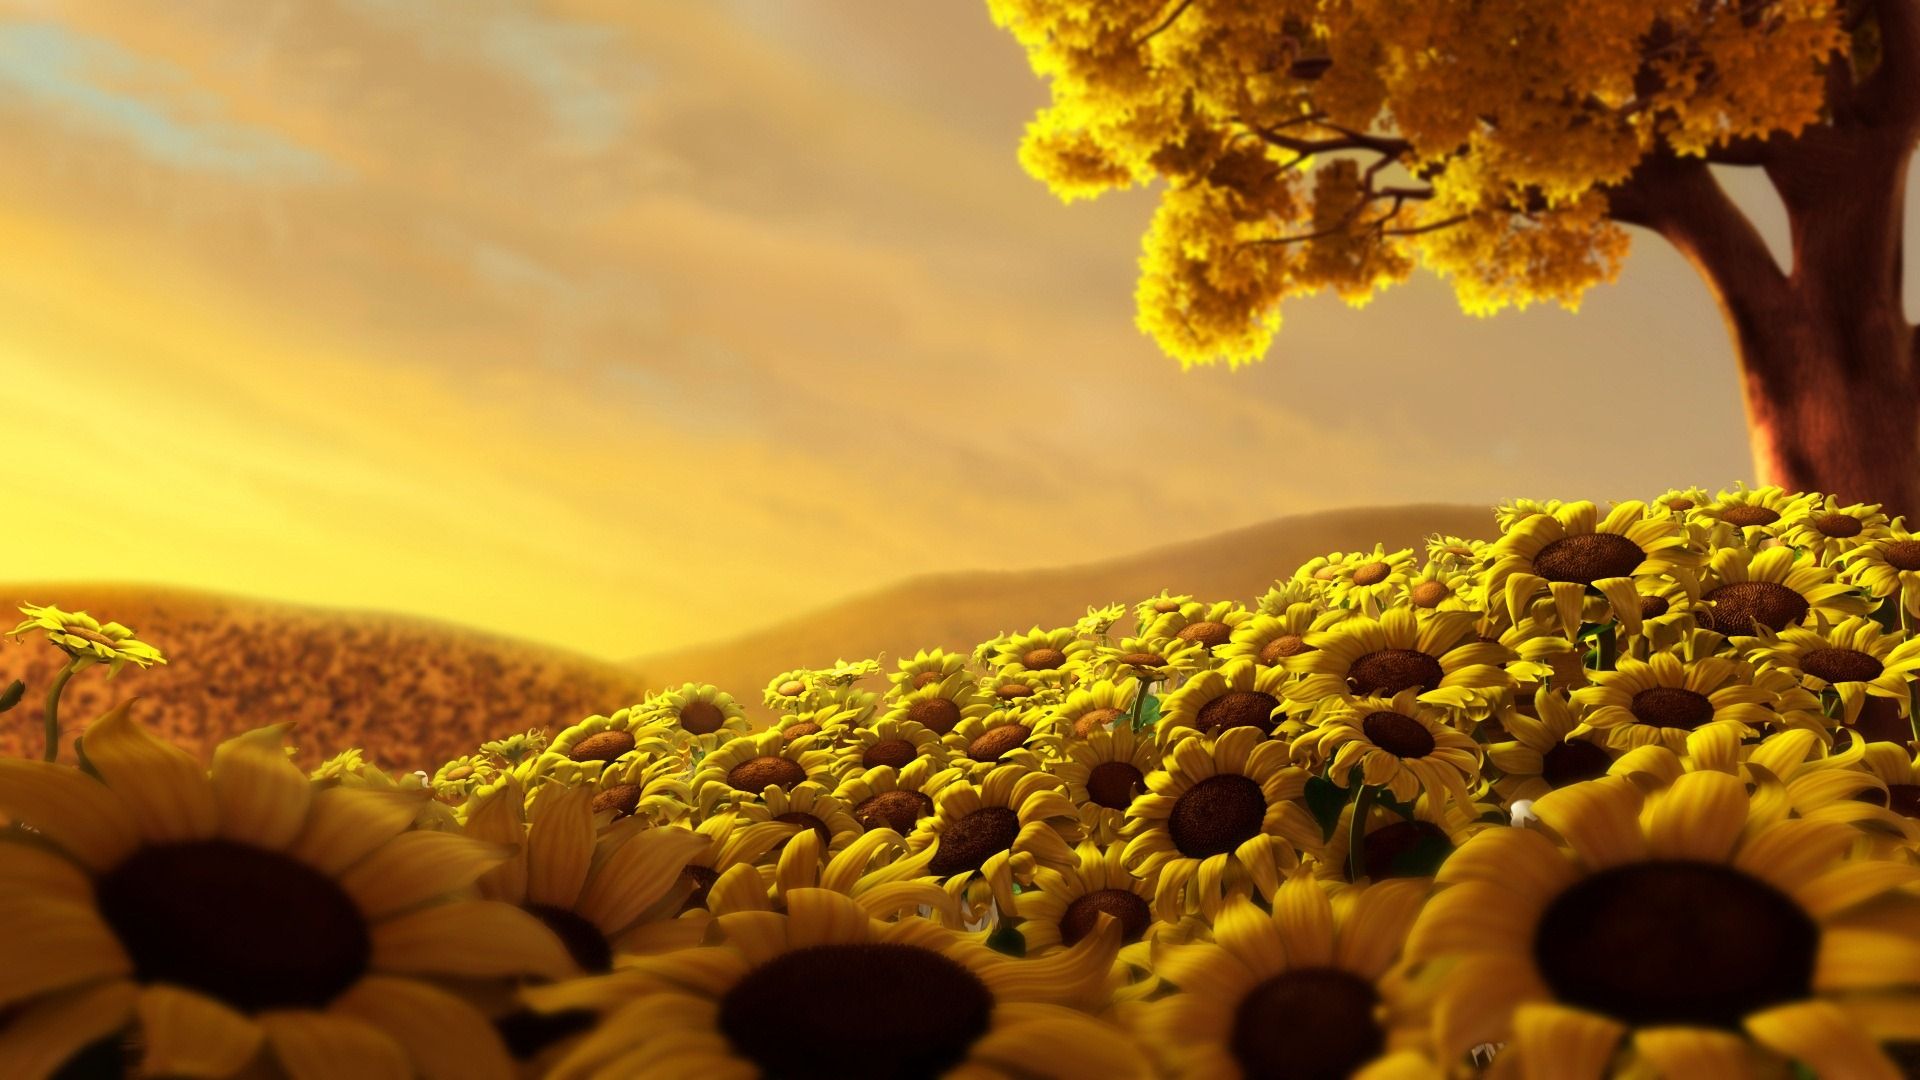 Summer Yellow Flowers, High Definition, High Quality, Widescreen